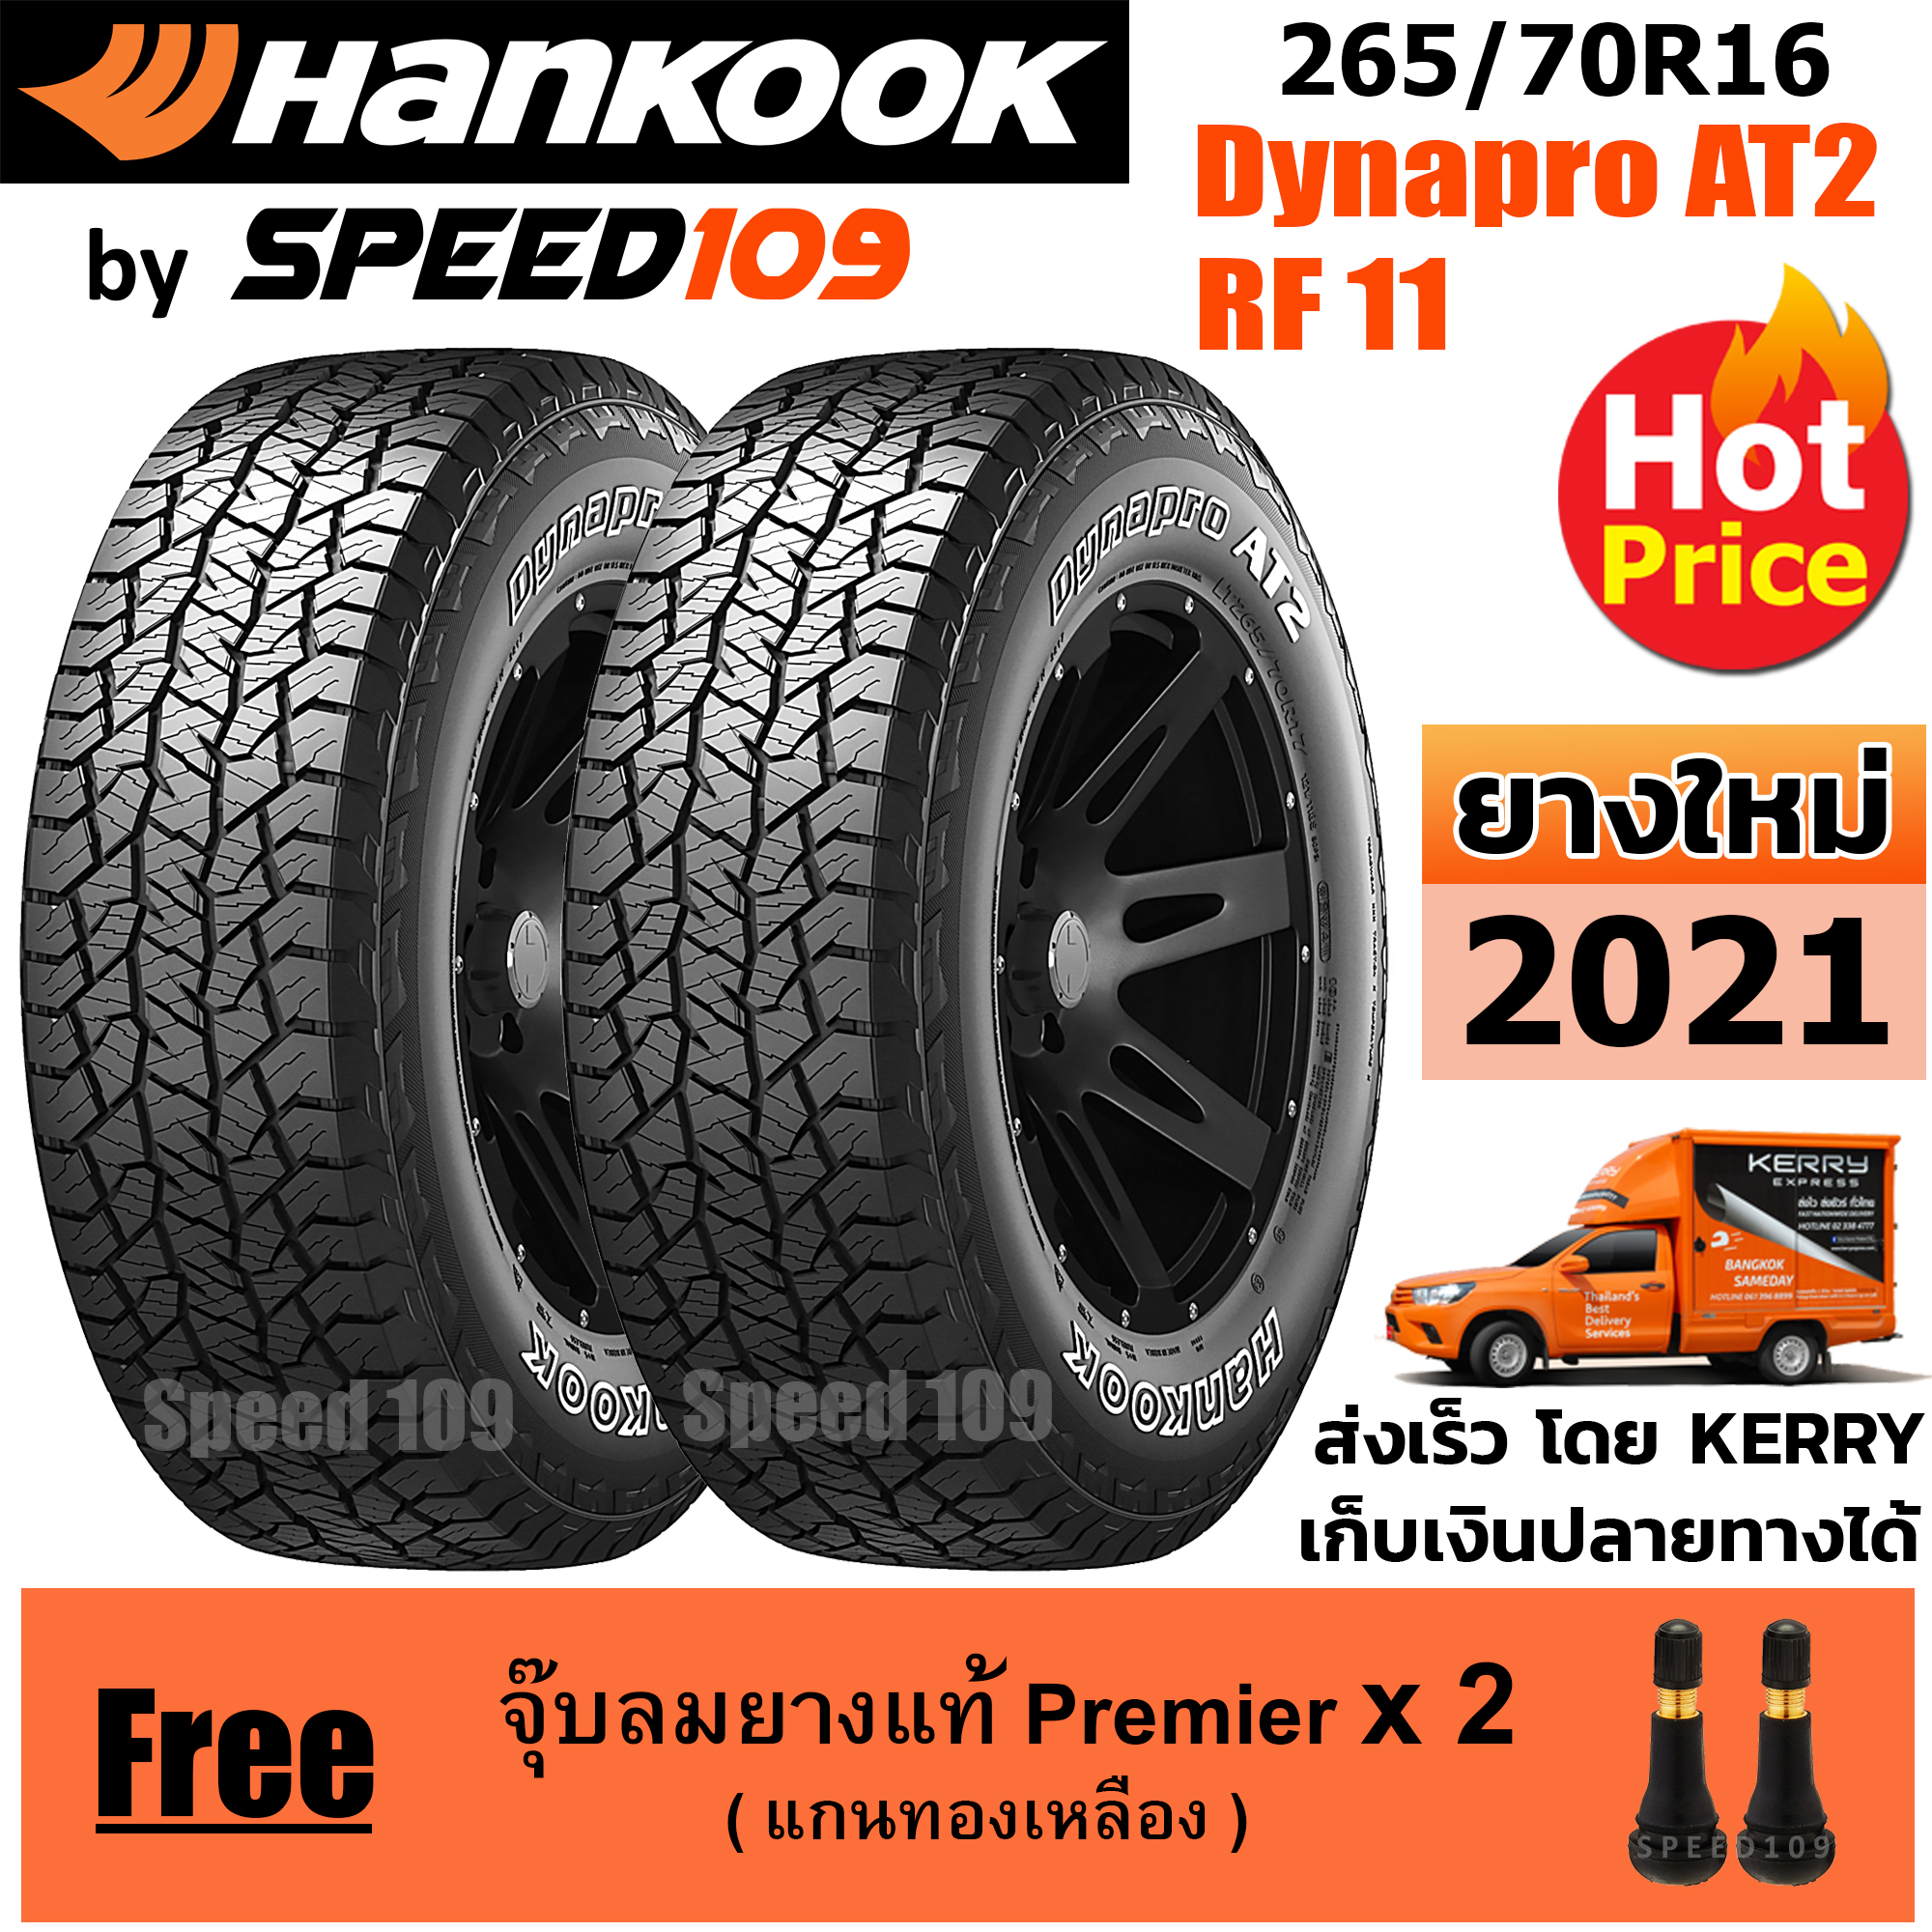 HANKOOK ยางรถยนต์ ขอบ 16 ขนาด 265/70R16 รุ่น Dynapro AT2  RF11 - 2 เส้น (ปี 2021)